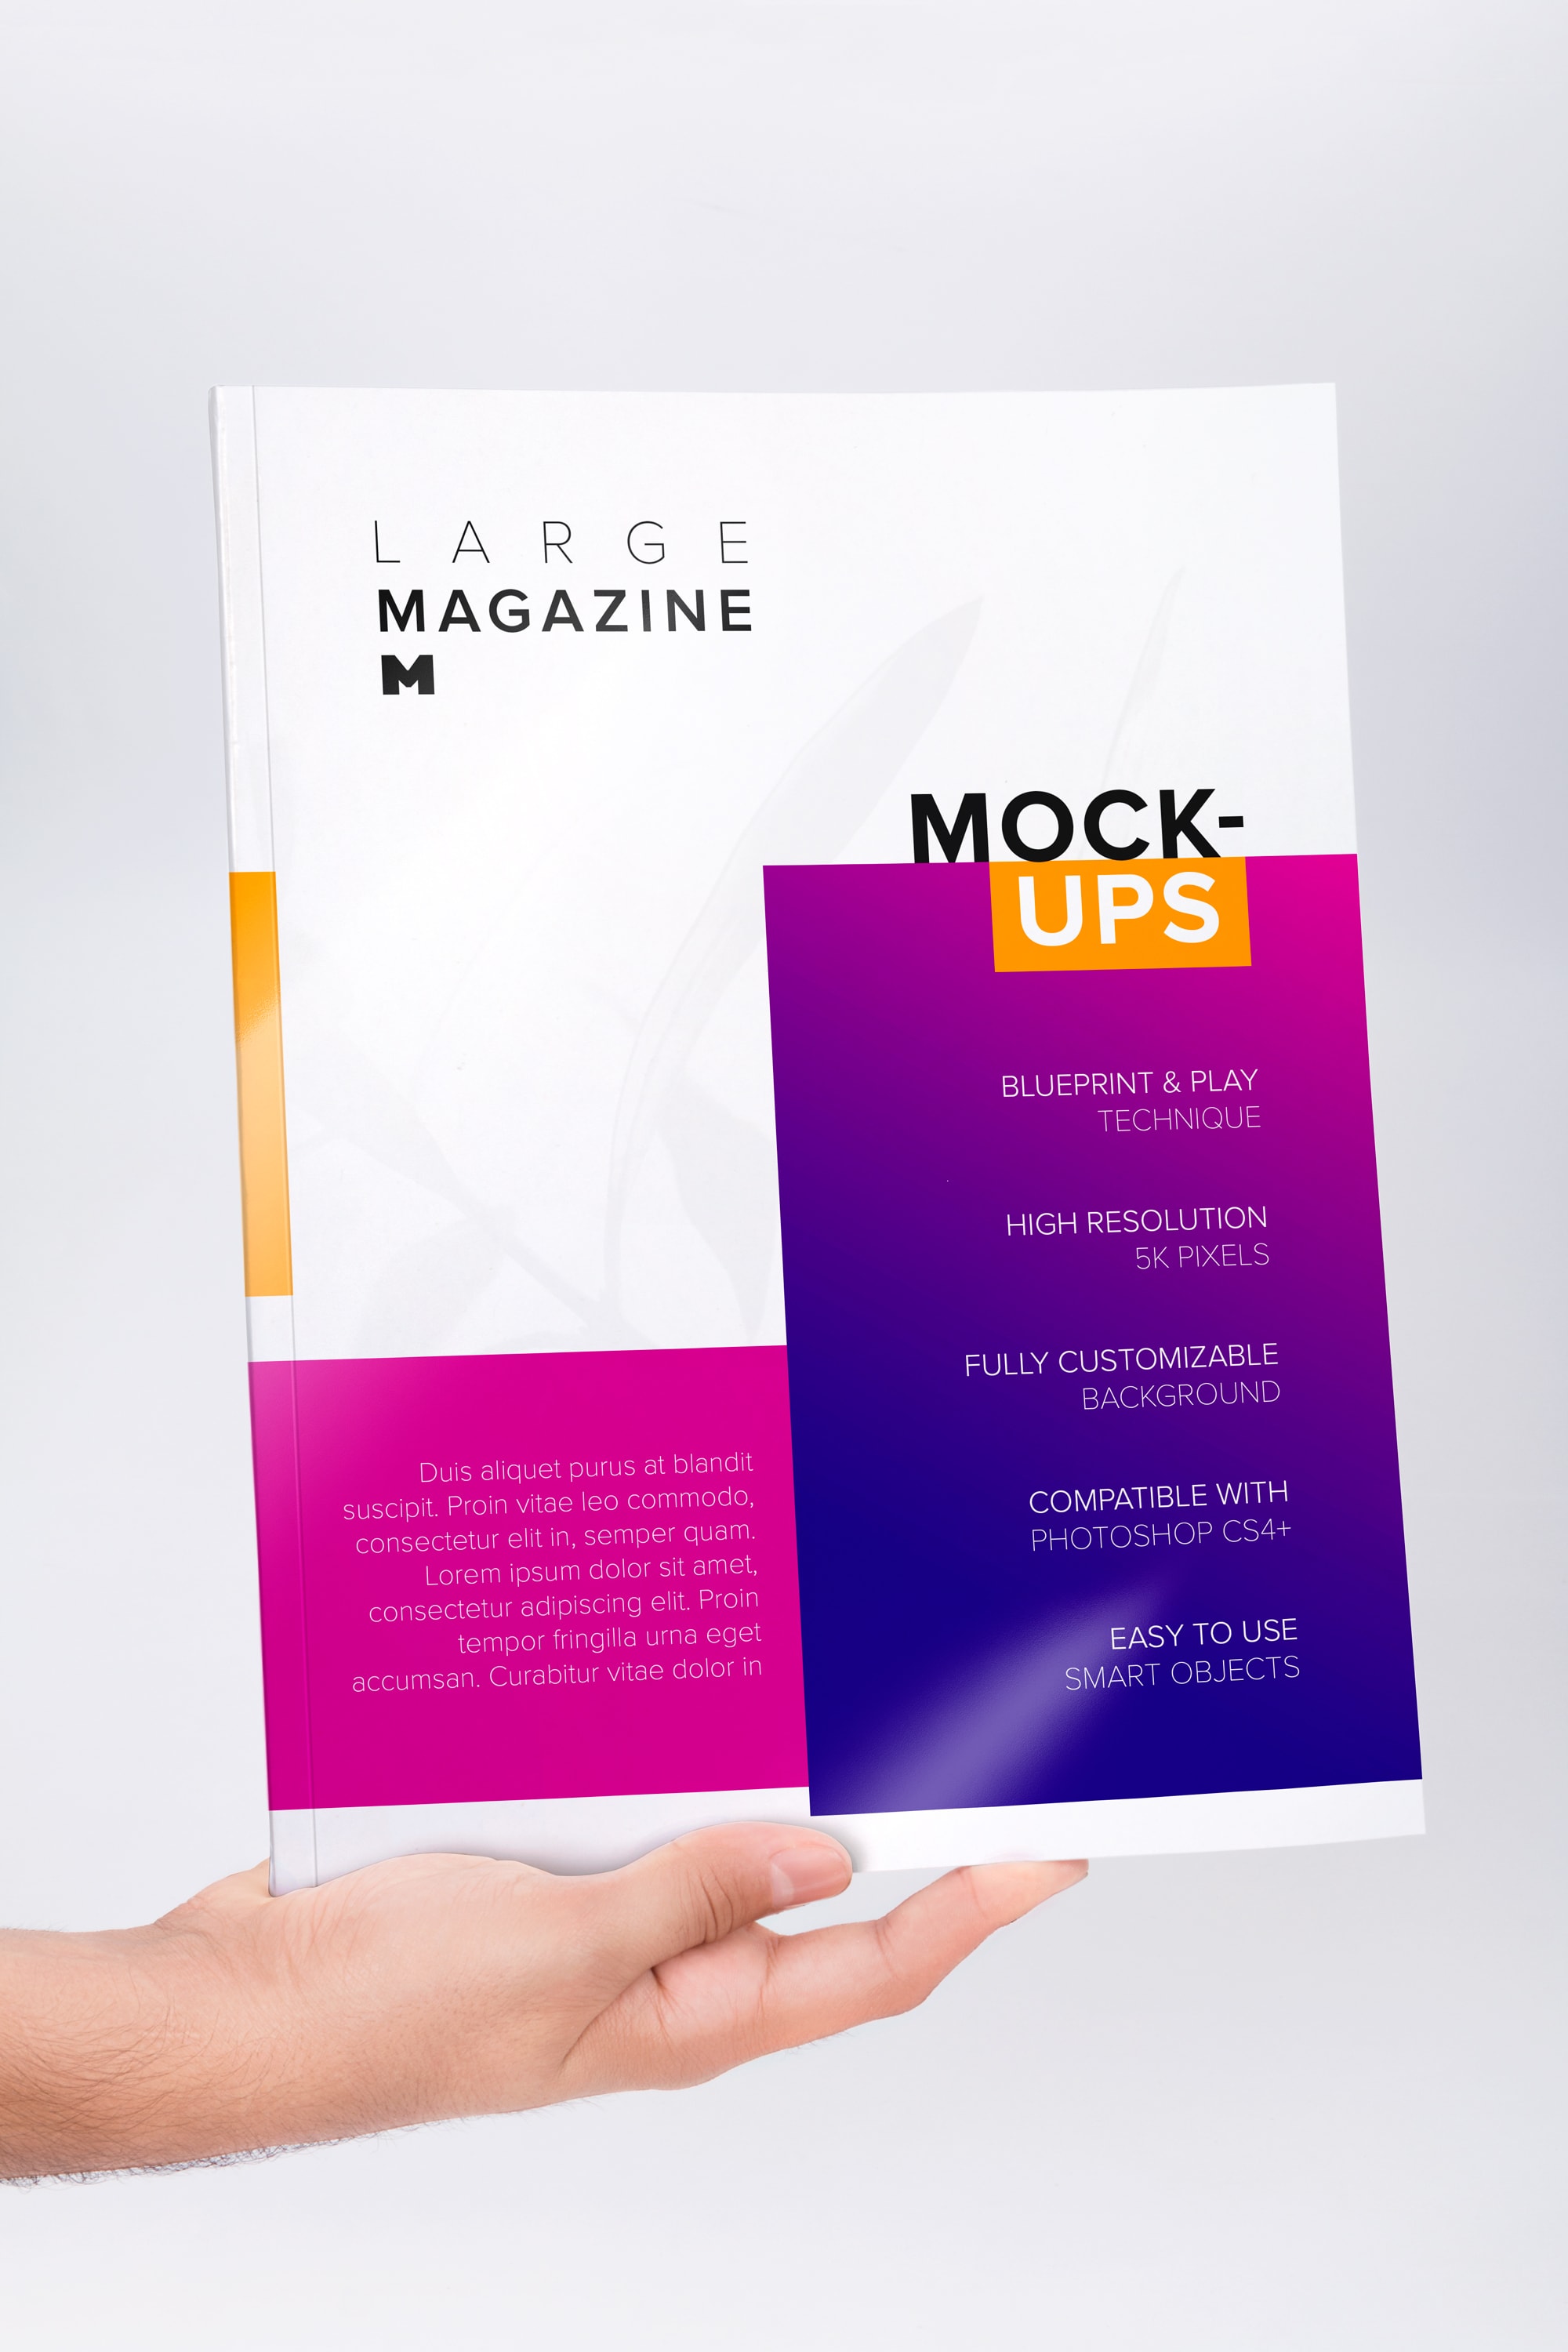 大型杂志封面设计效果图样机01 Large Magazine Cover Mockup 01插图